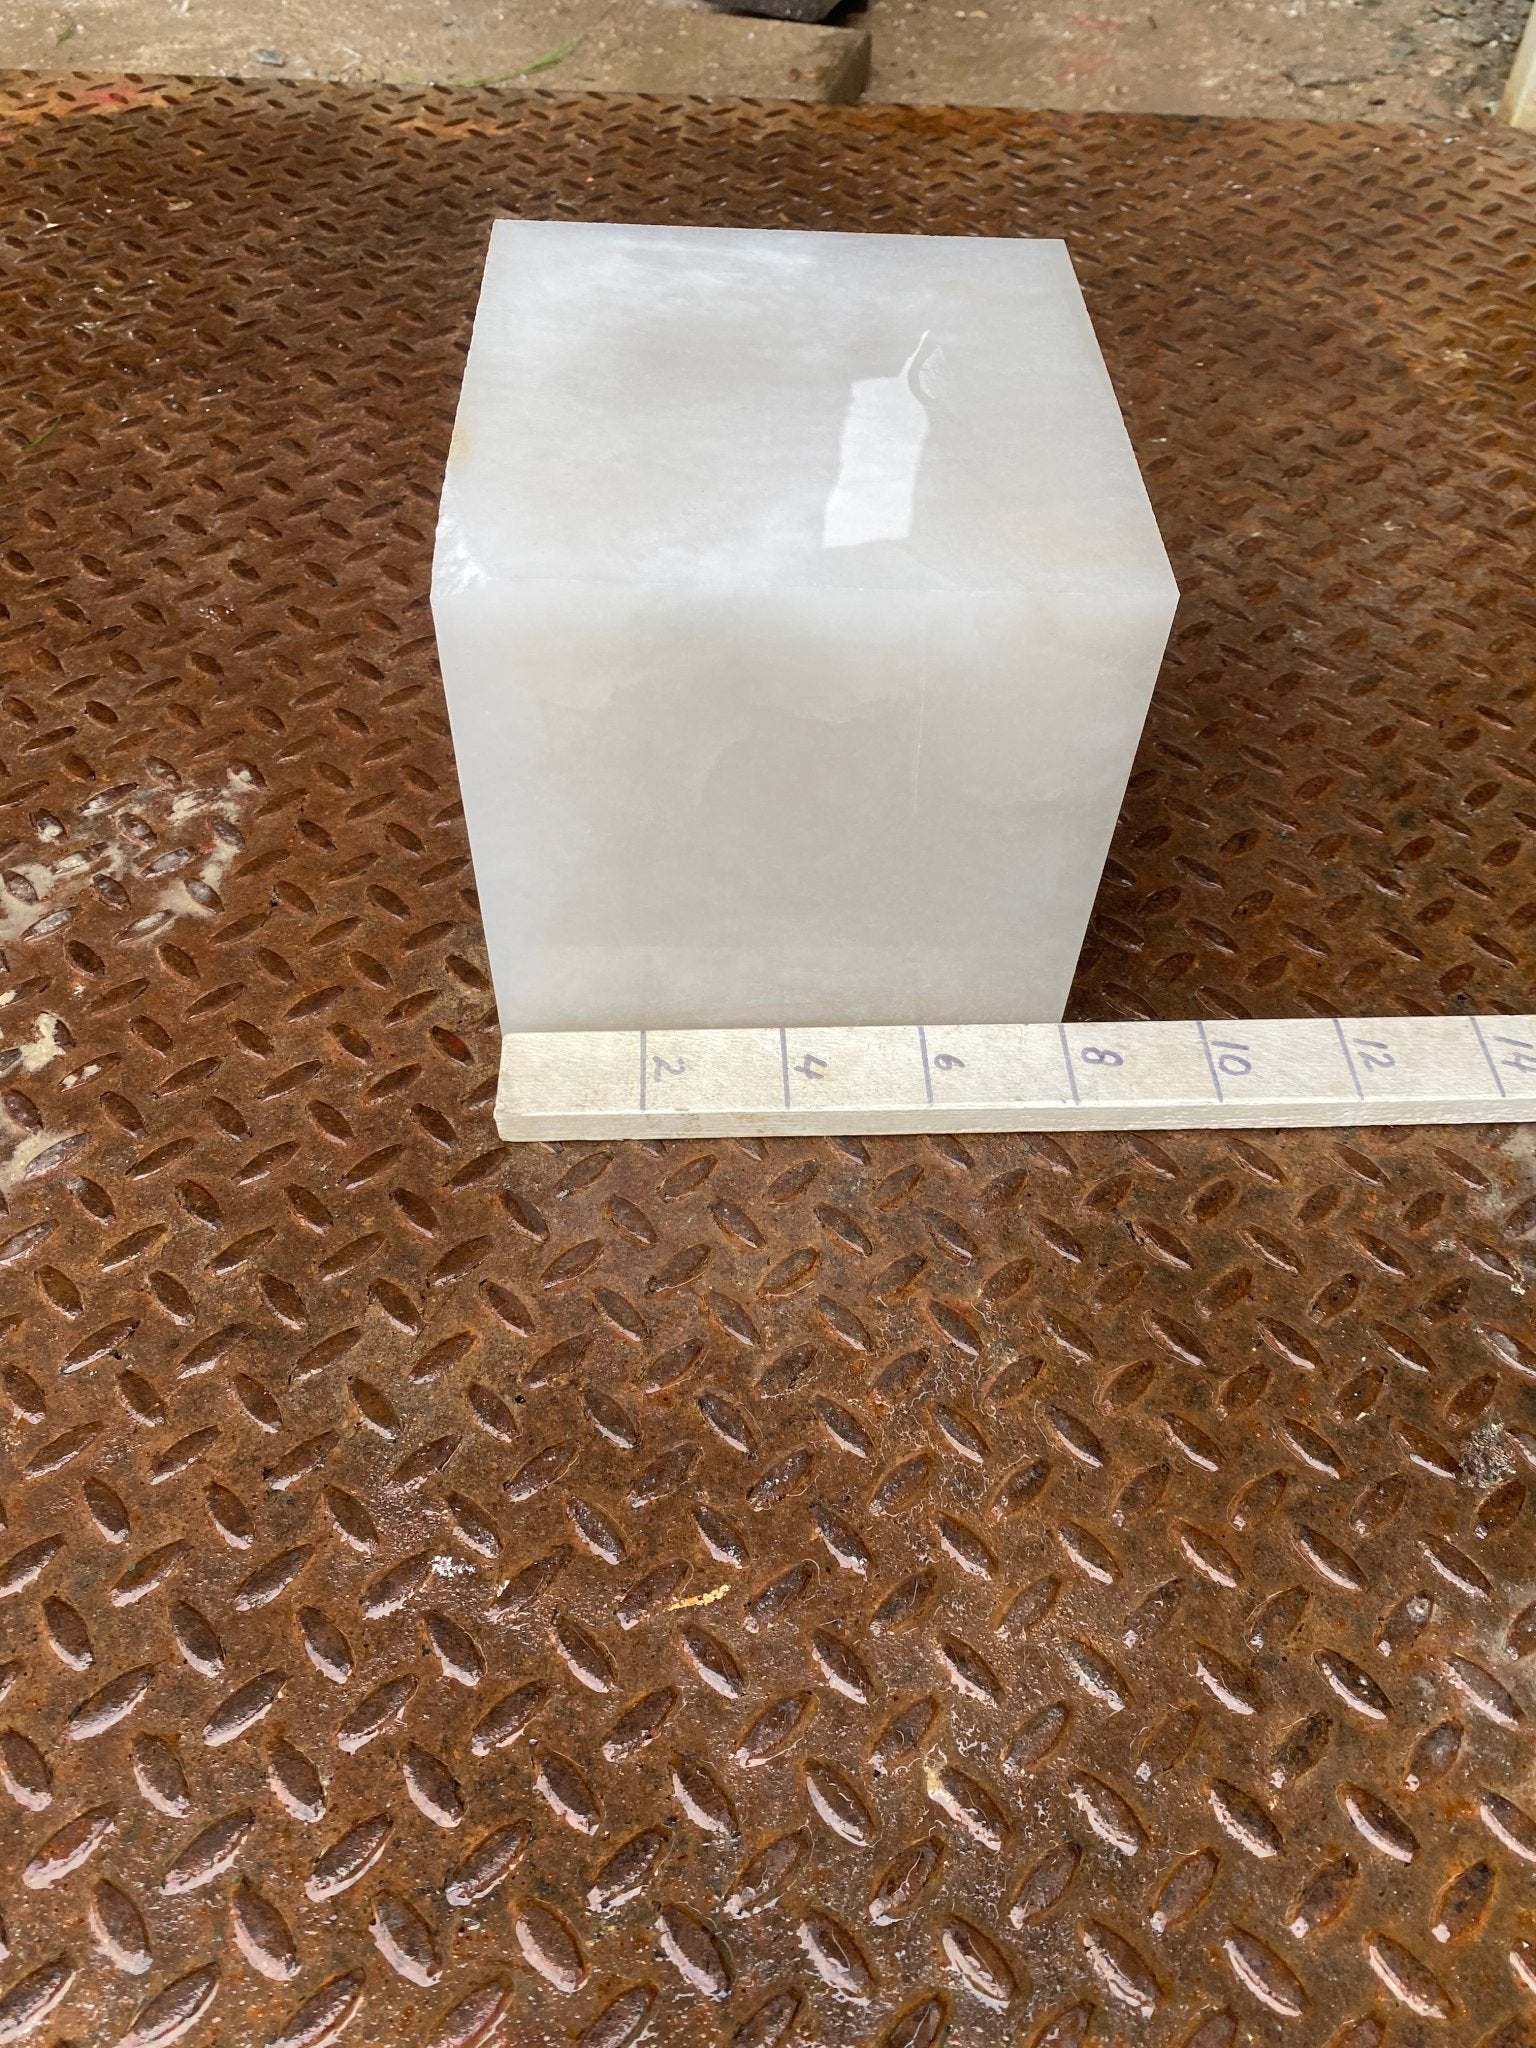 Translucent White Spanish Alabaster 45LBS 8x8x8 Block - Gian Carlo Artistic Stone